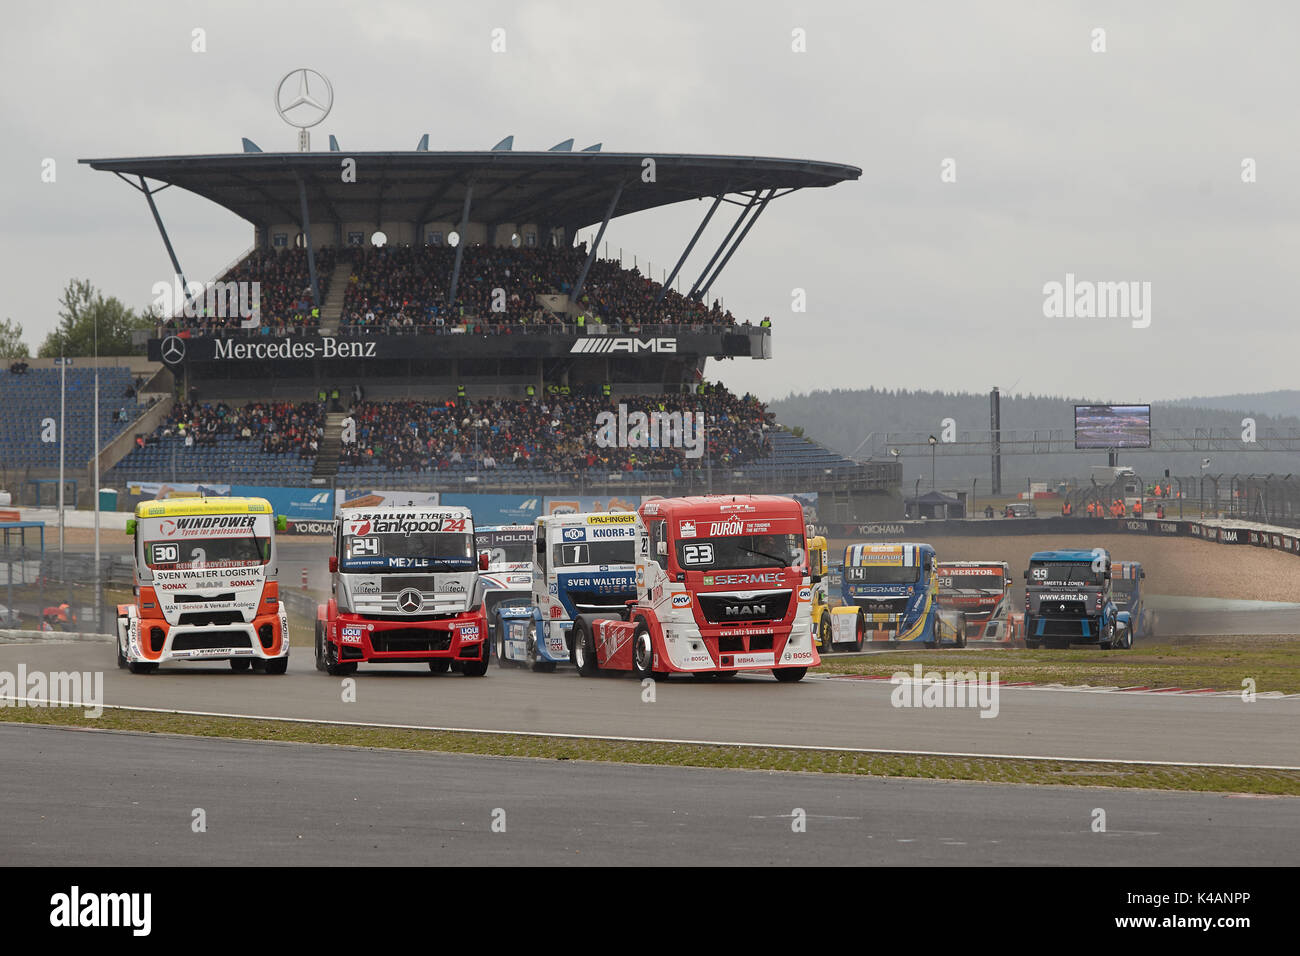 ADAC Truck Grand Prix 2017 at the Nürburgring race track, Nürburg, Rhineland-Palatinate, Germany Stock Photo